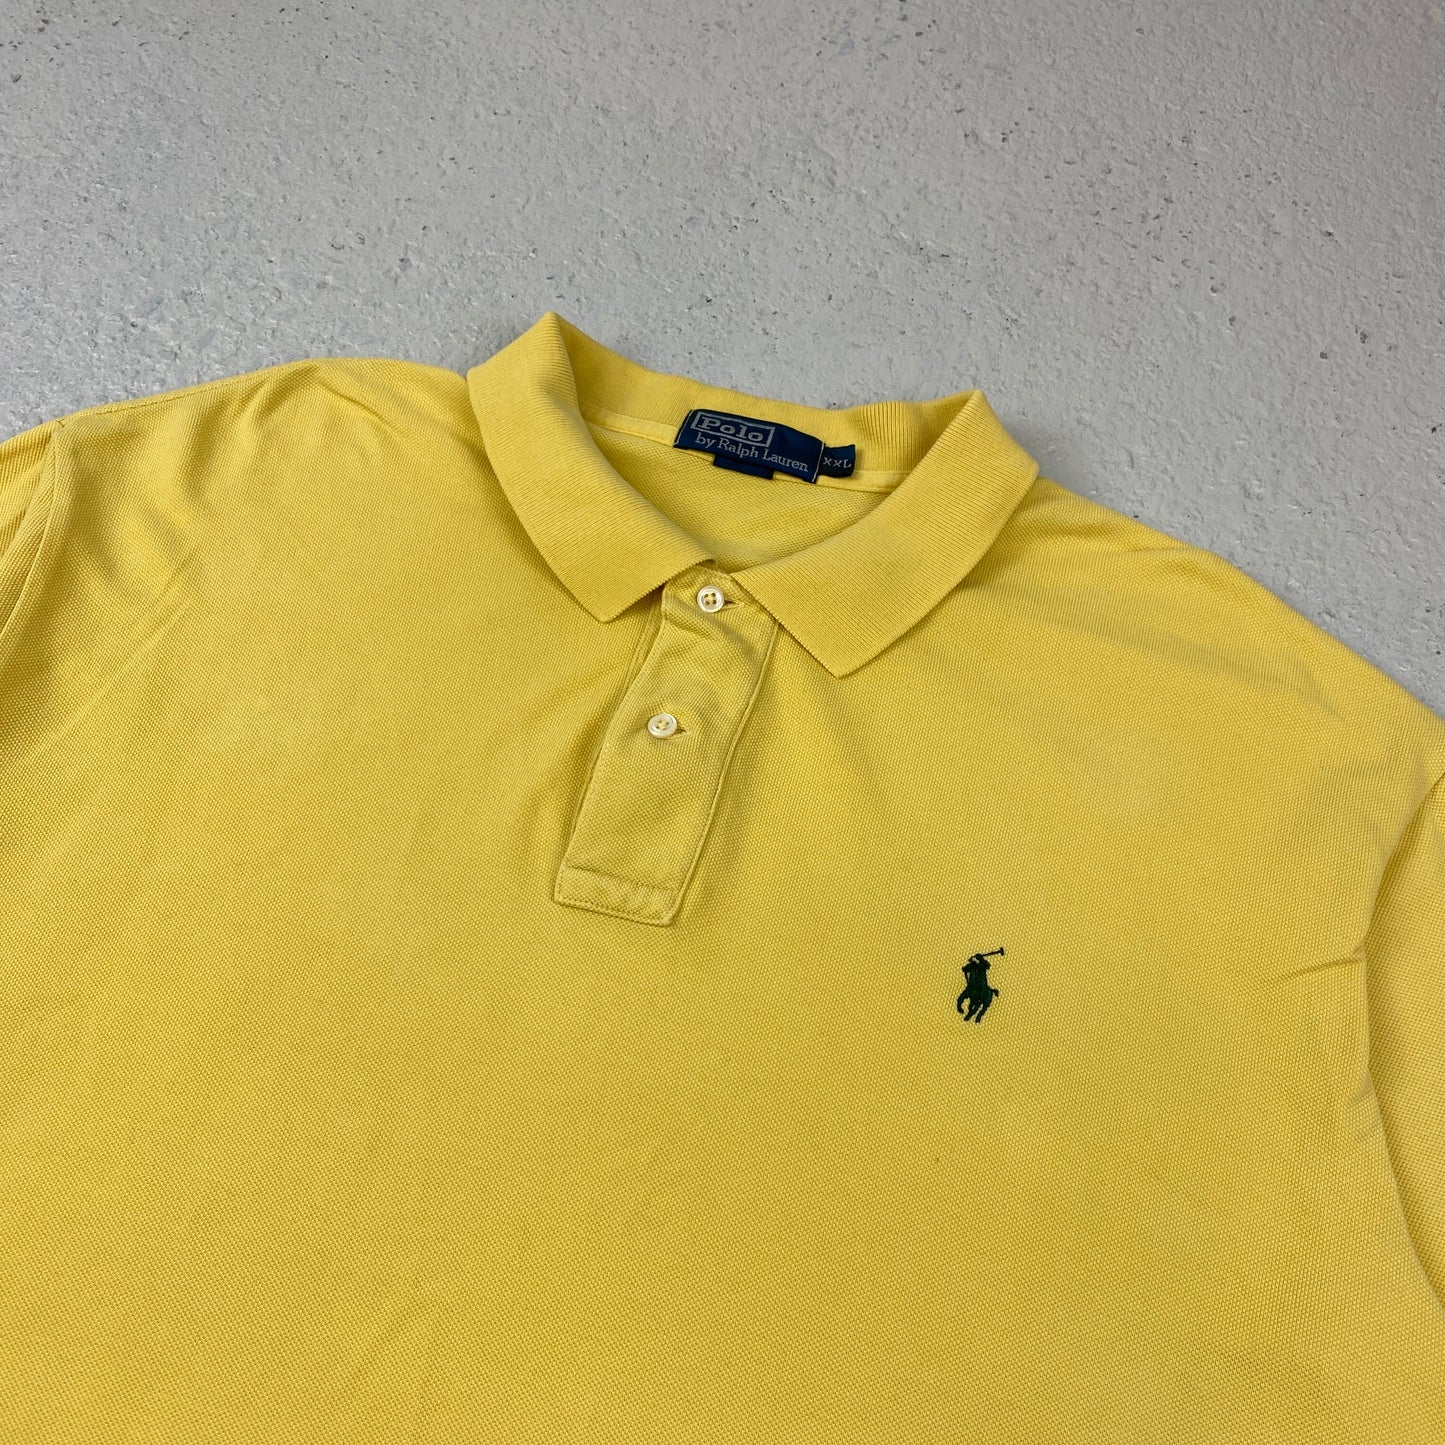 Polo Ralph Lauren polo shirt (XXL)